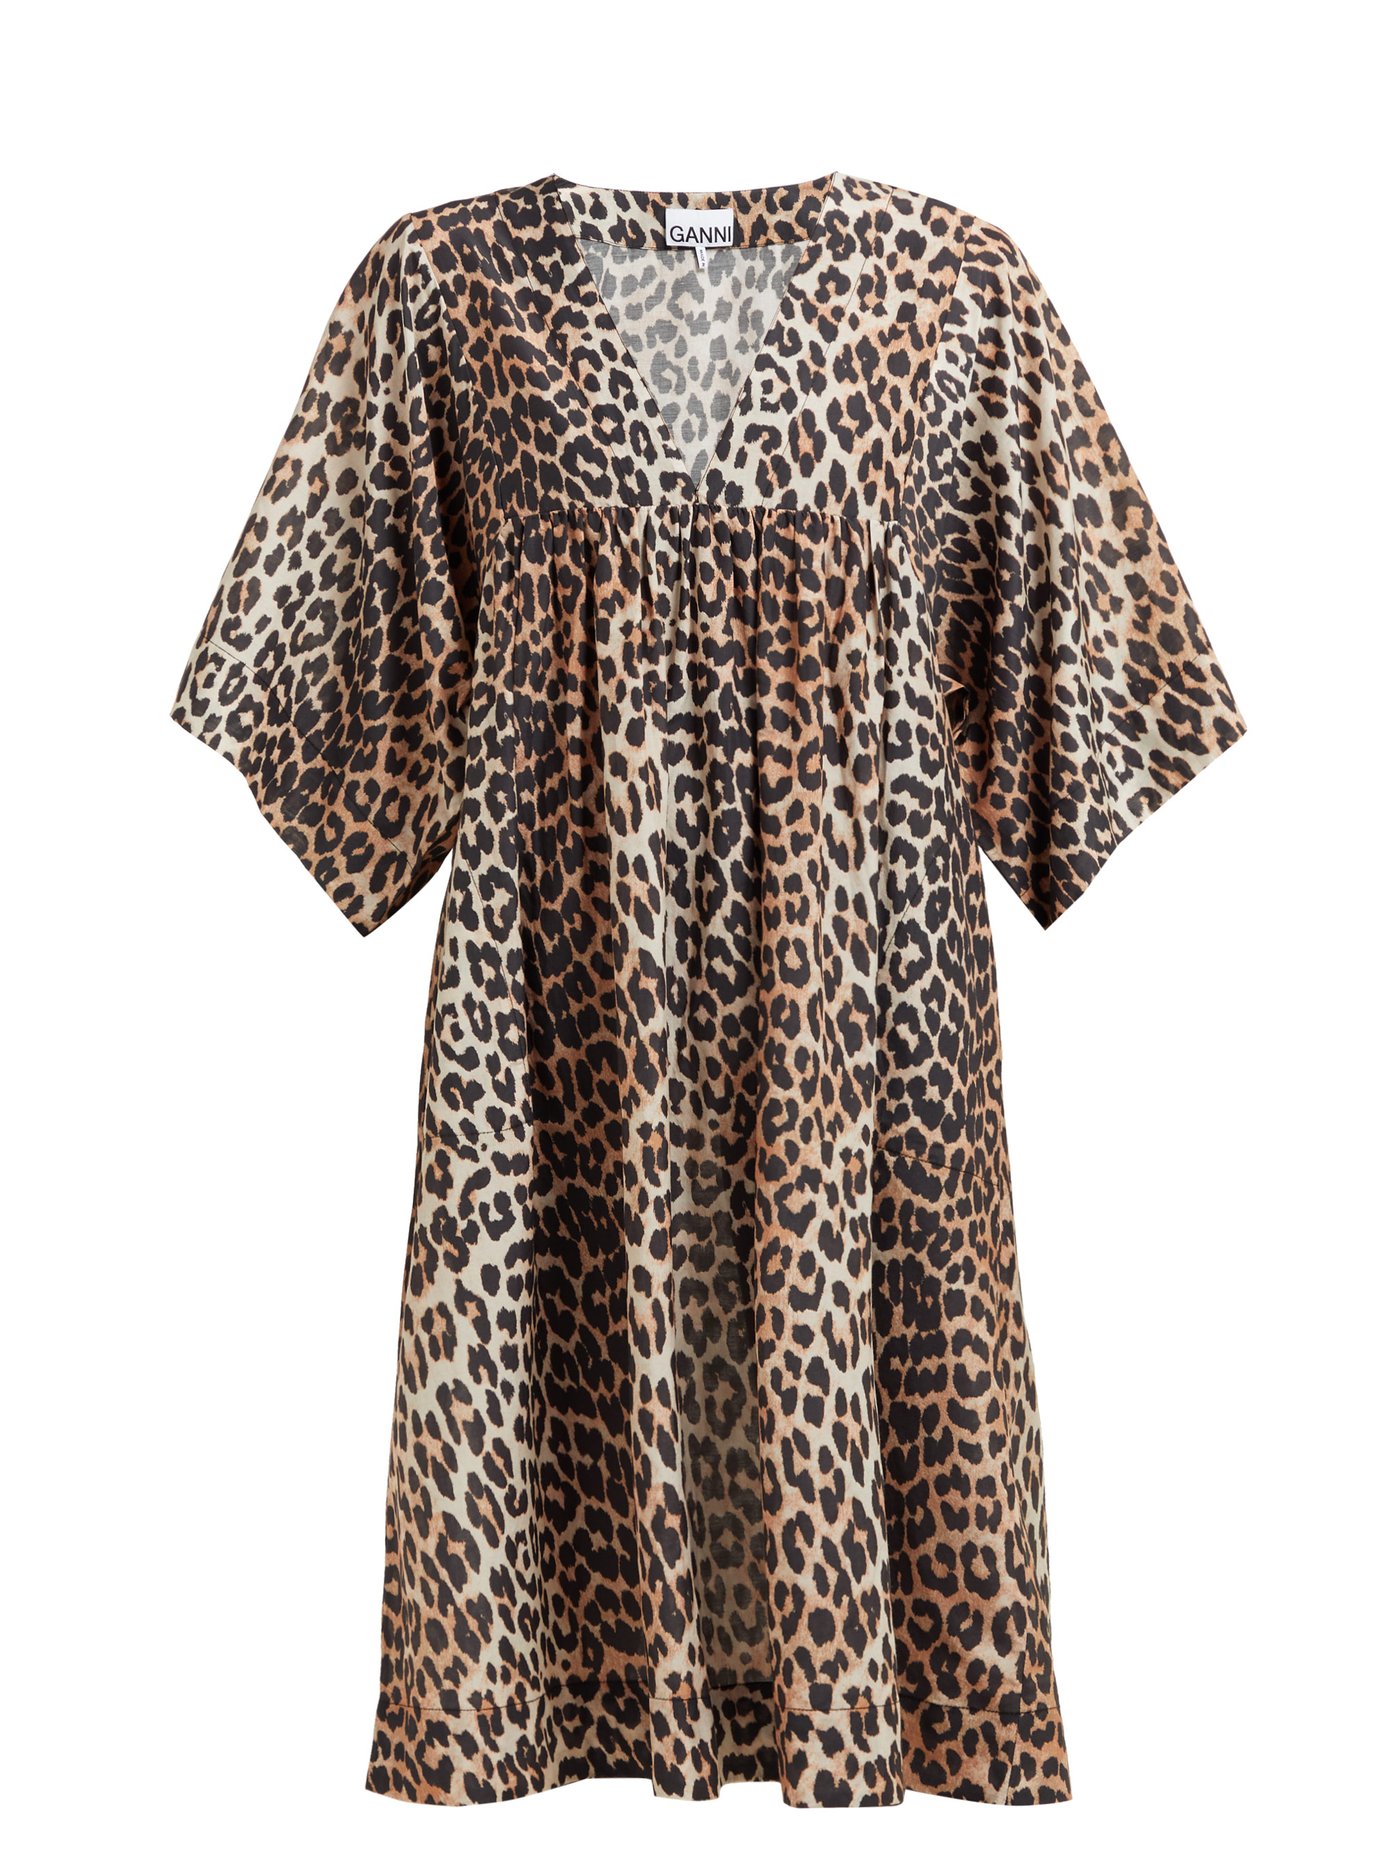 leopard dress australia